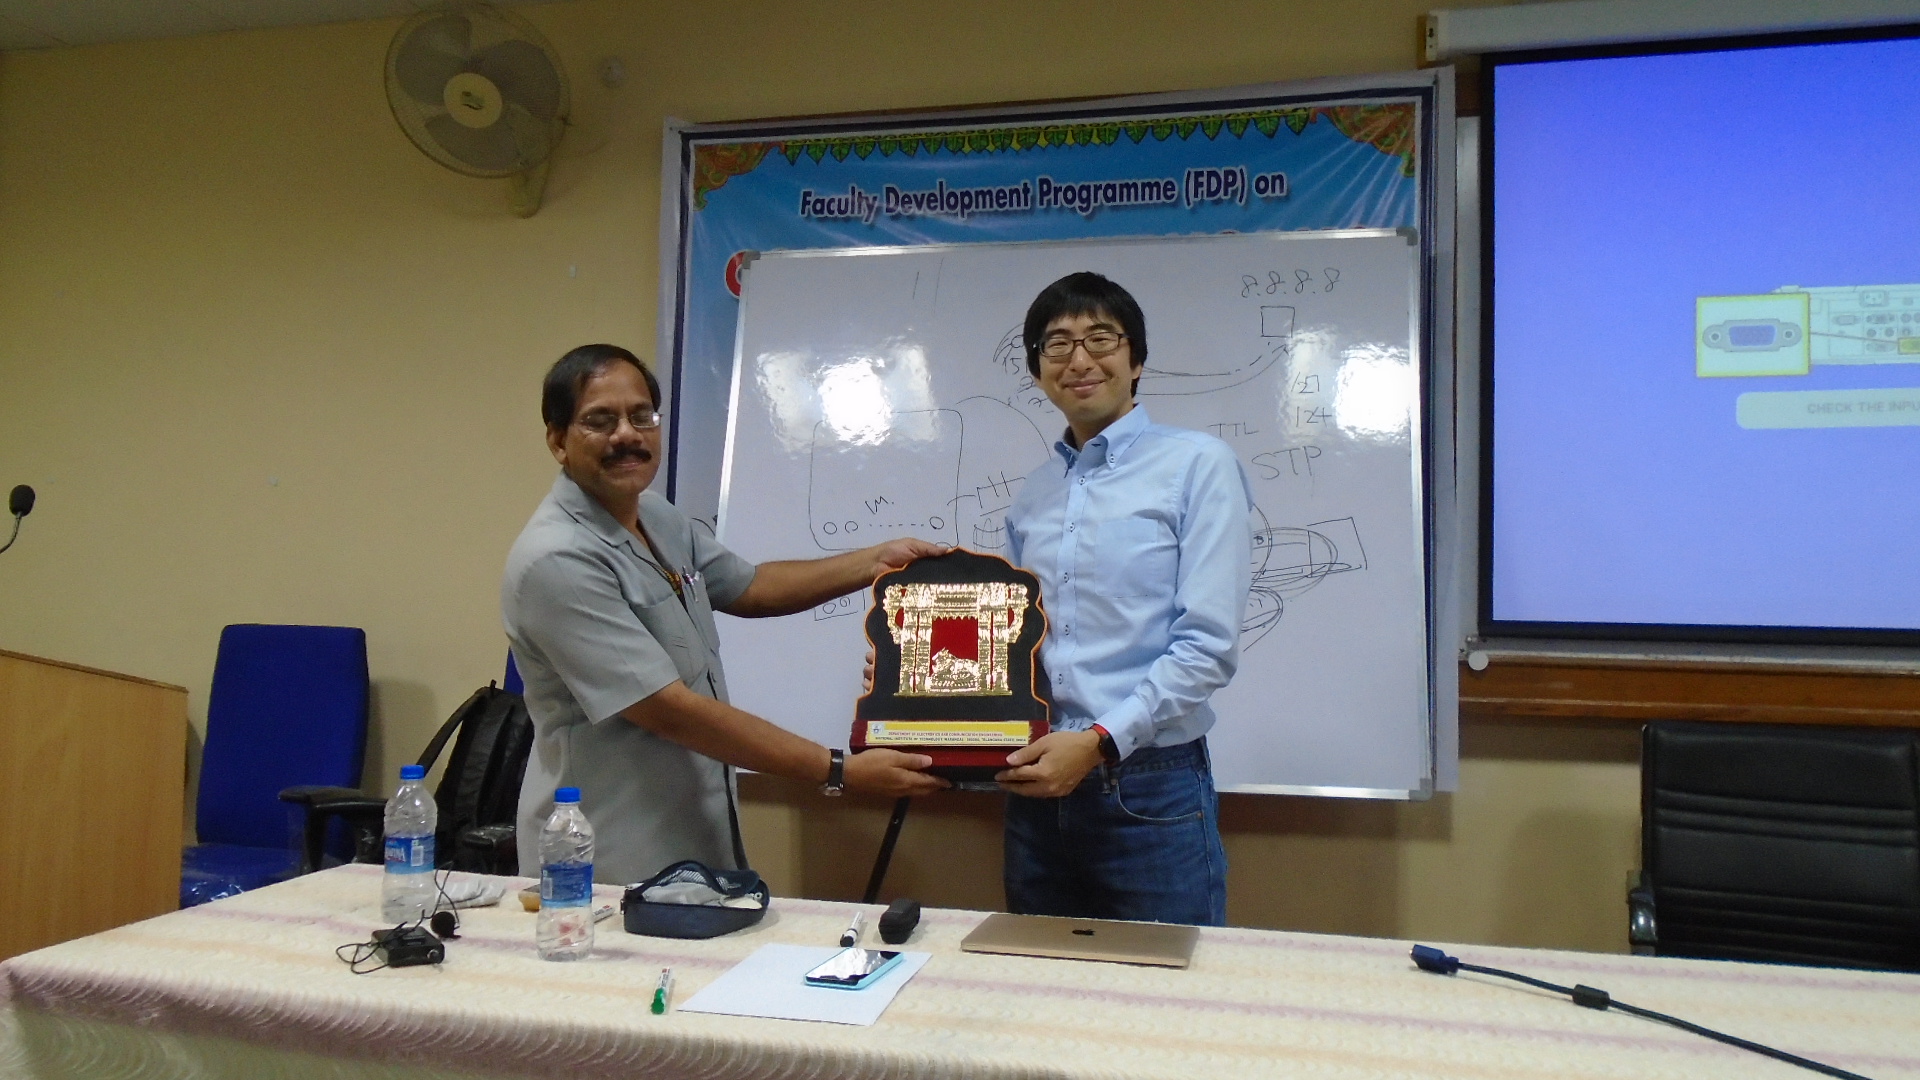 Vr siddhartha engineering college faculty recruitment presentation